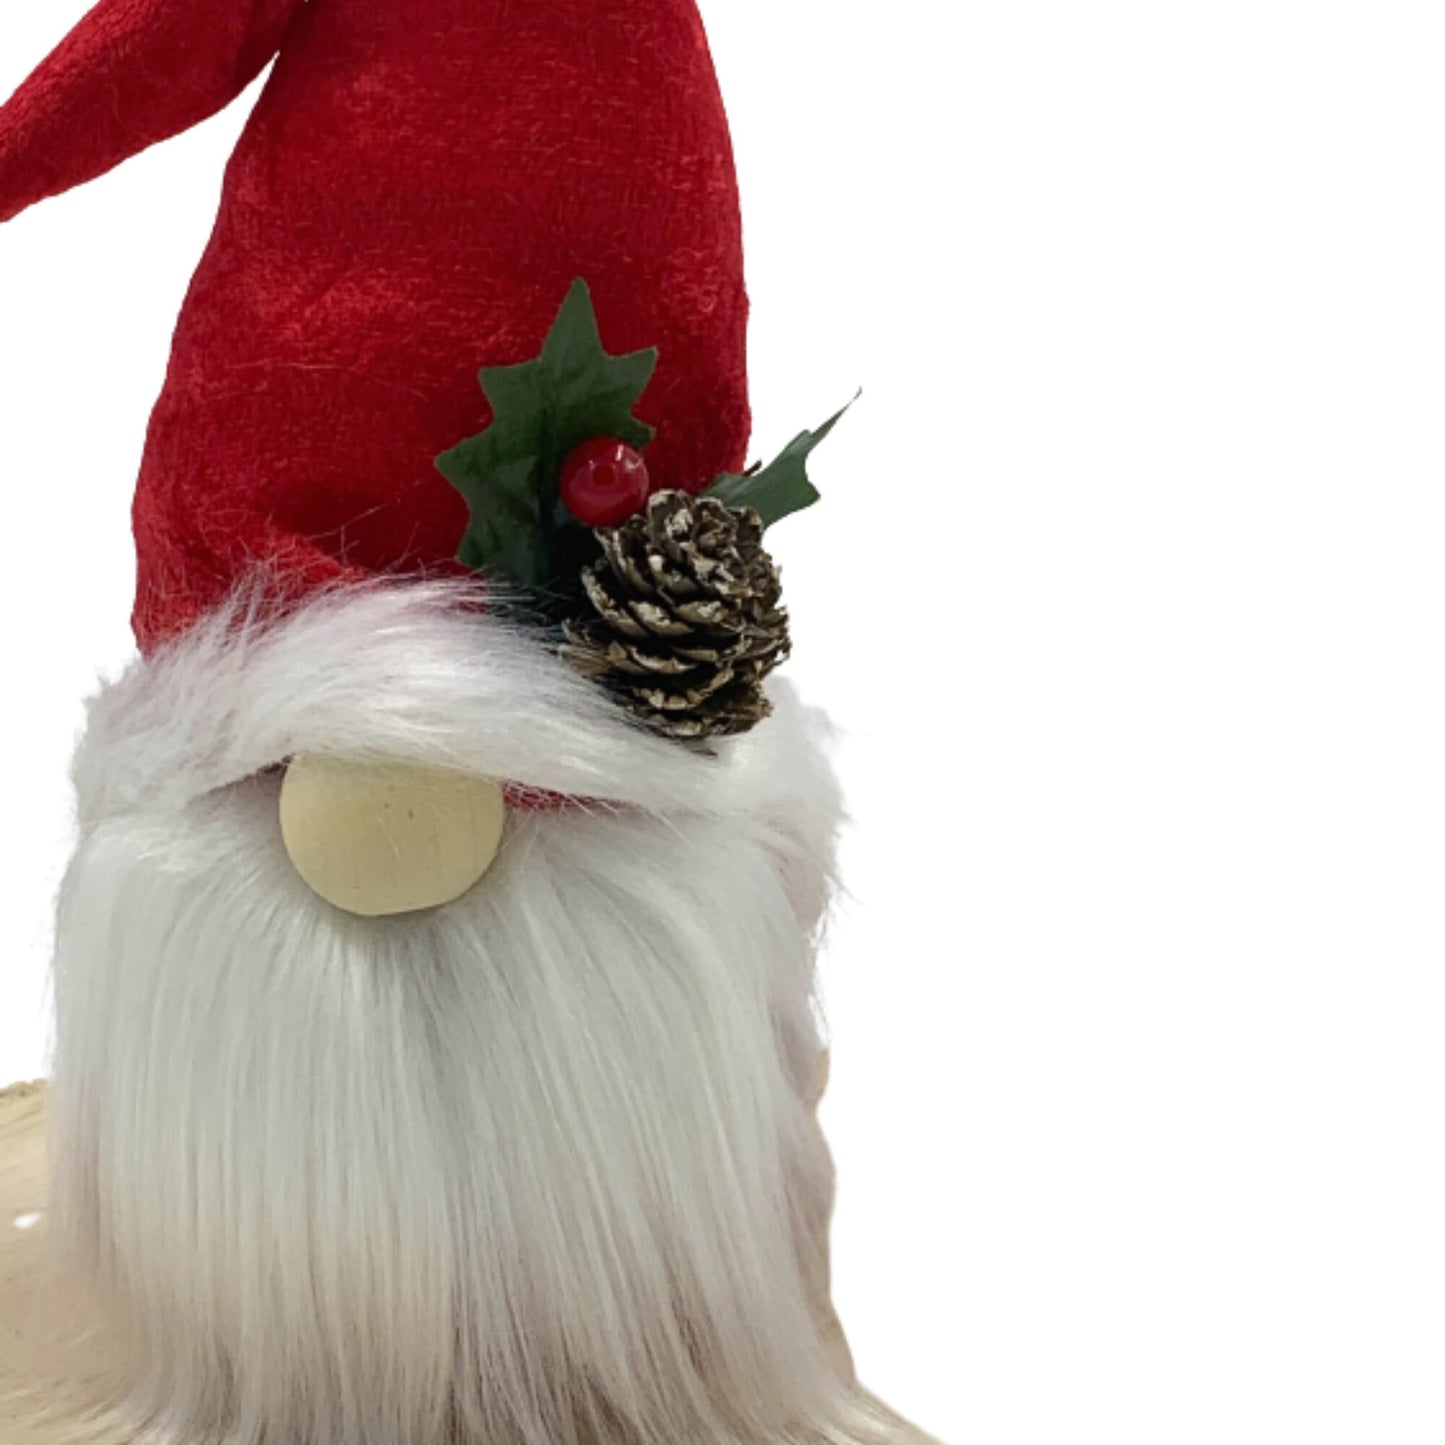 Santa Claus Gnome / Christmas Tiered Tray Decor / Winter Gnome Decorations